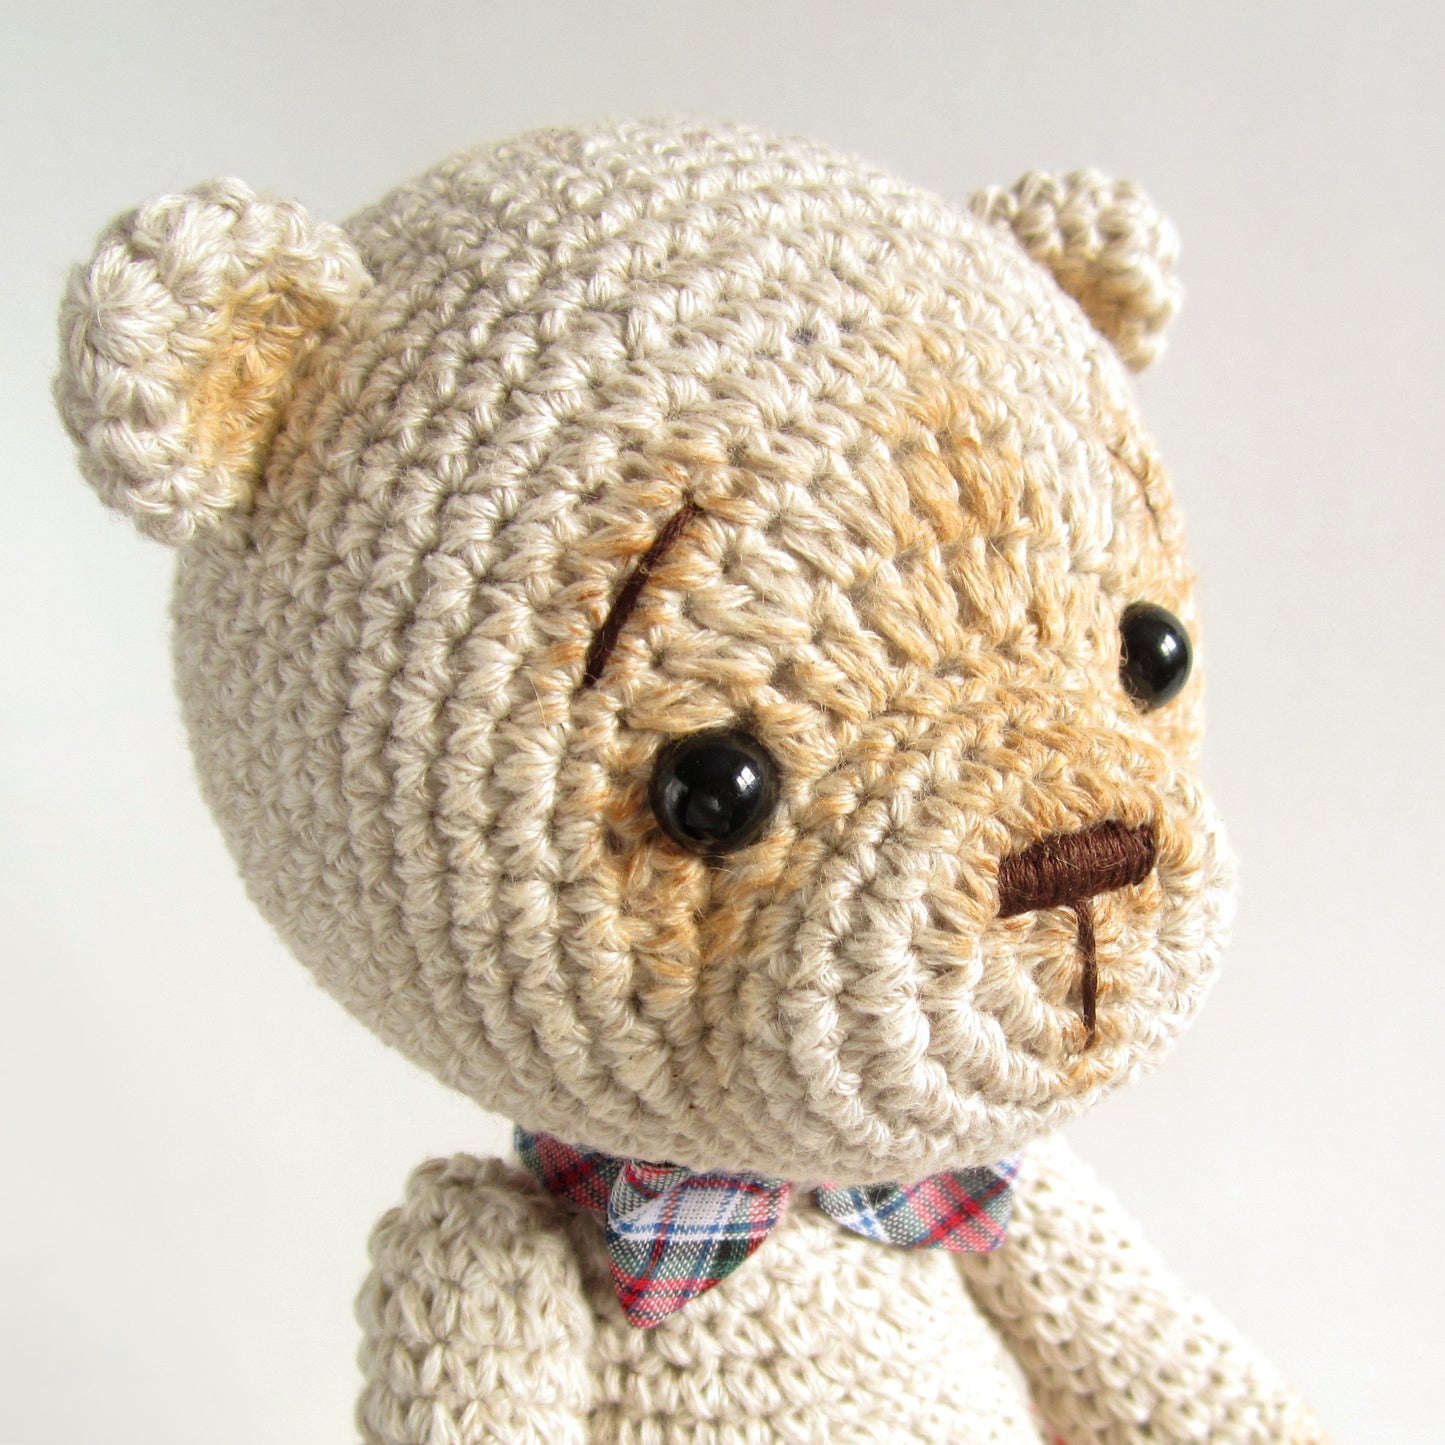 PATTERN: Classic Teddy Bear